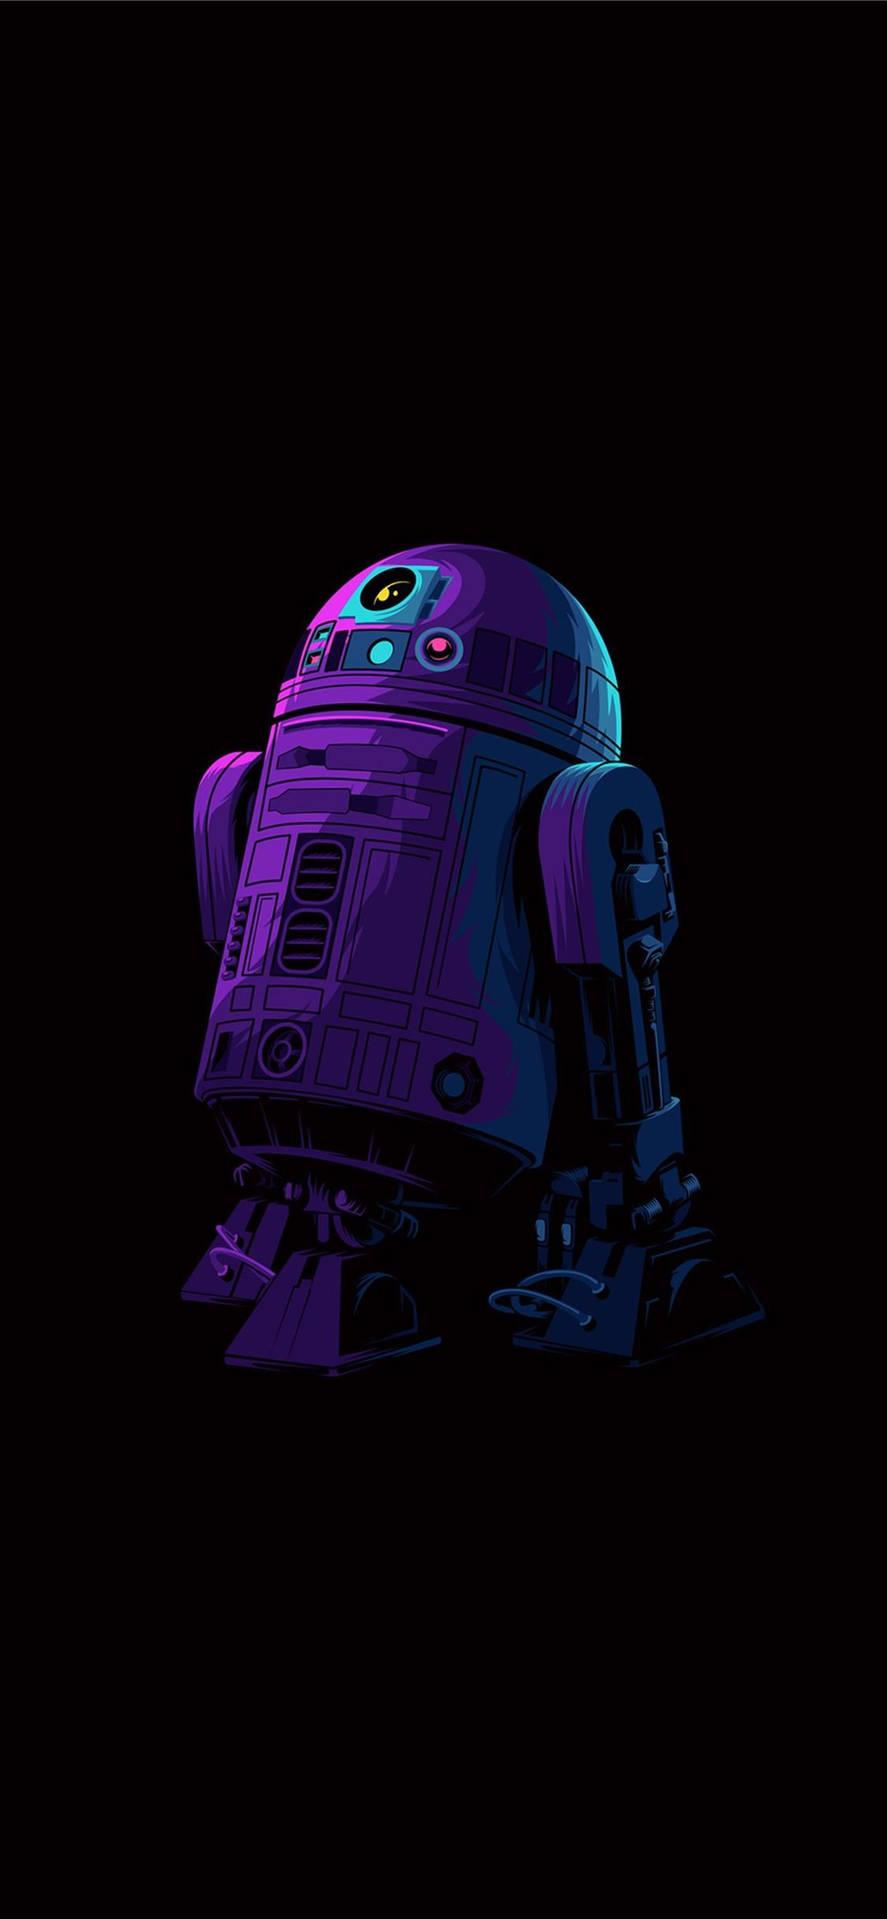 Cool iPhone Star Wars R2 D2 Neon Aesthetic Wallpaper